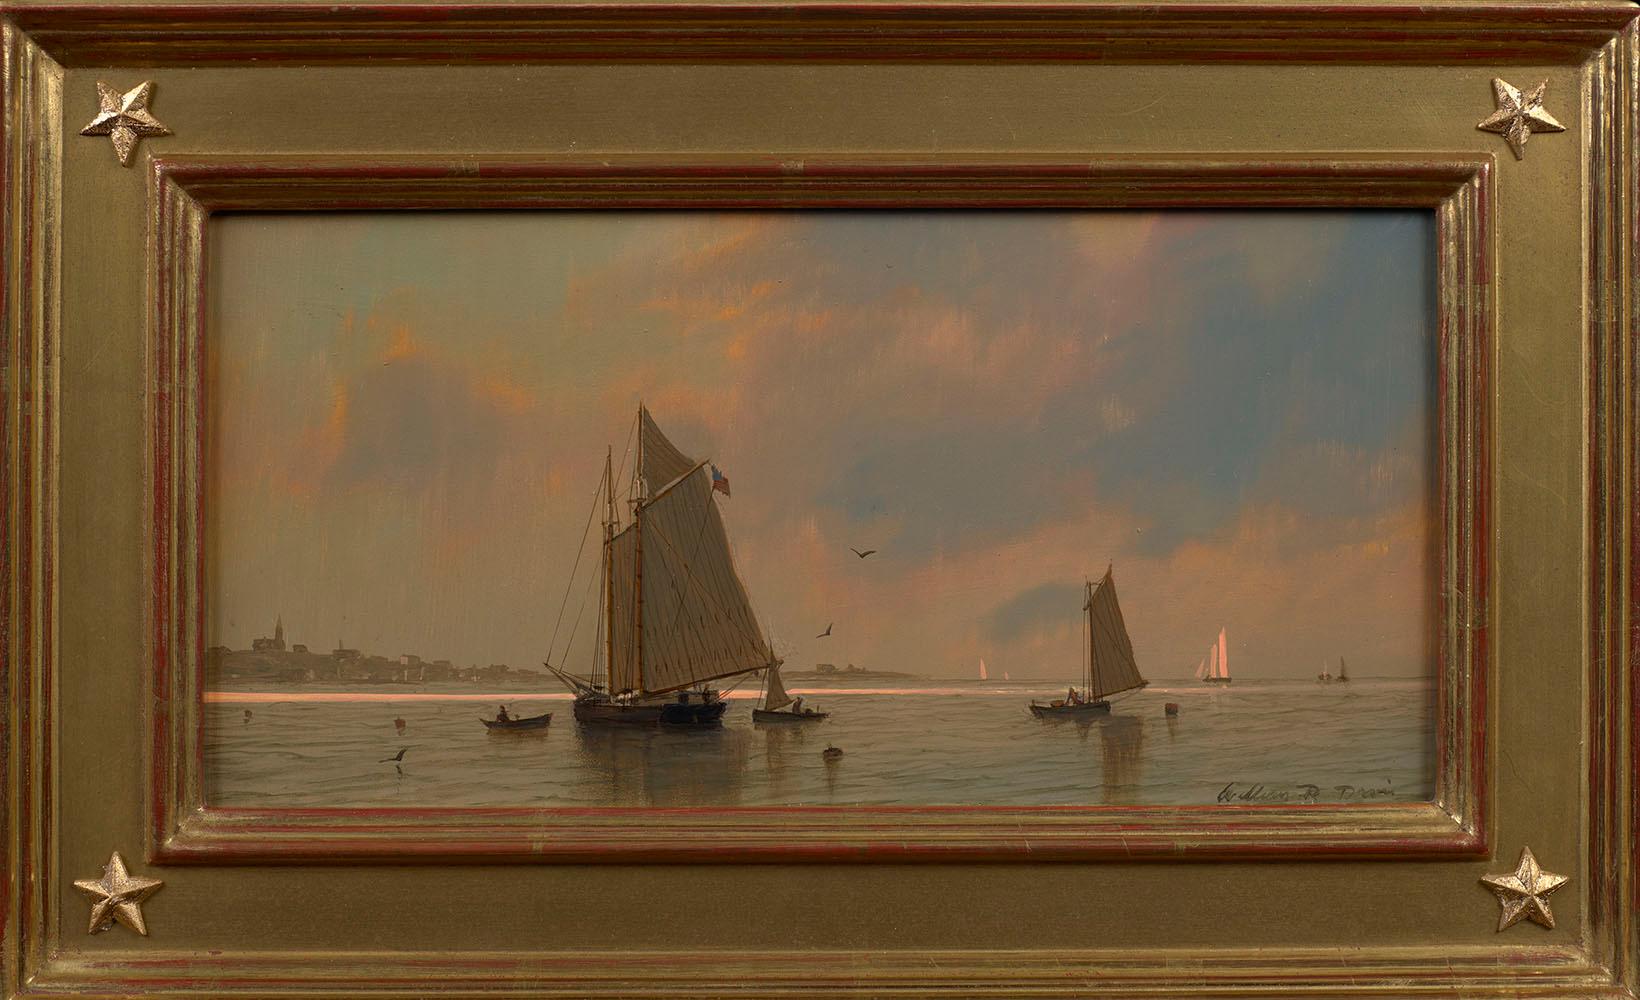 Fishing Schooner at Work, 2019 - Painting by William Davis, Jr.